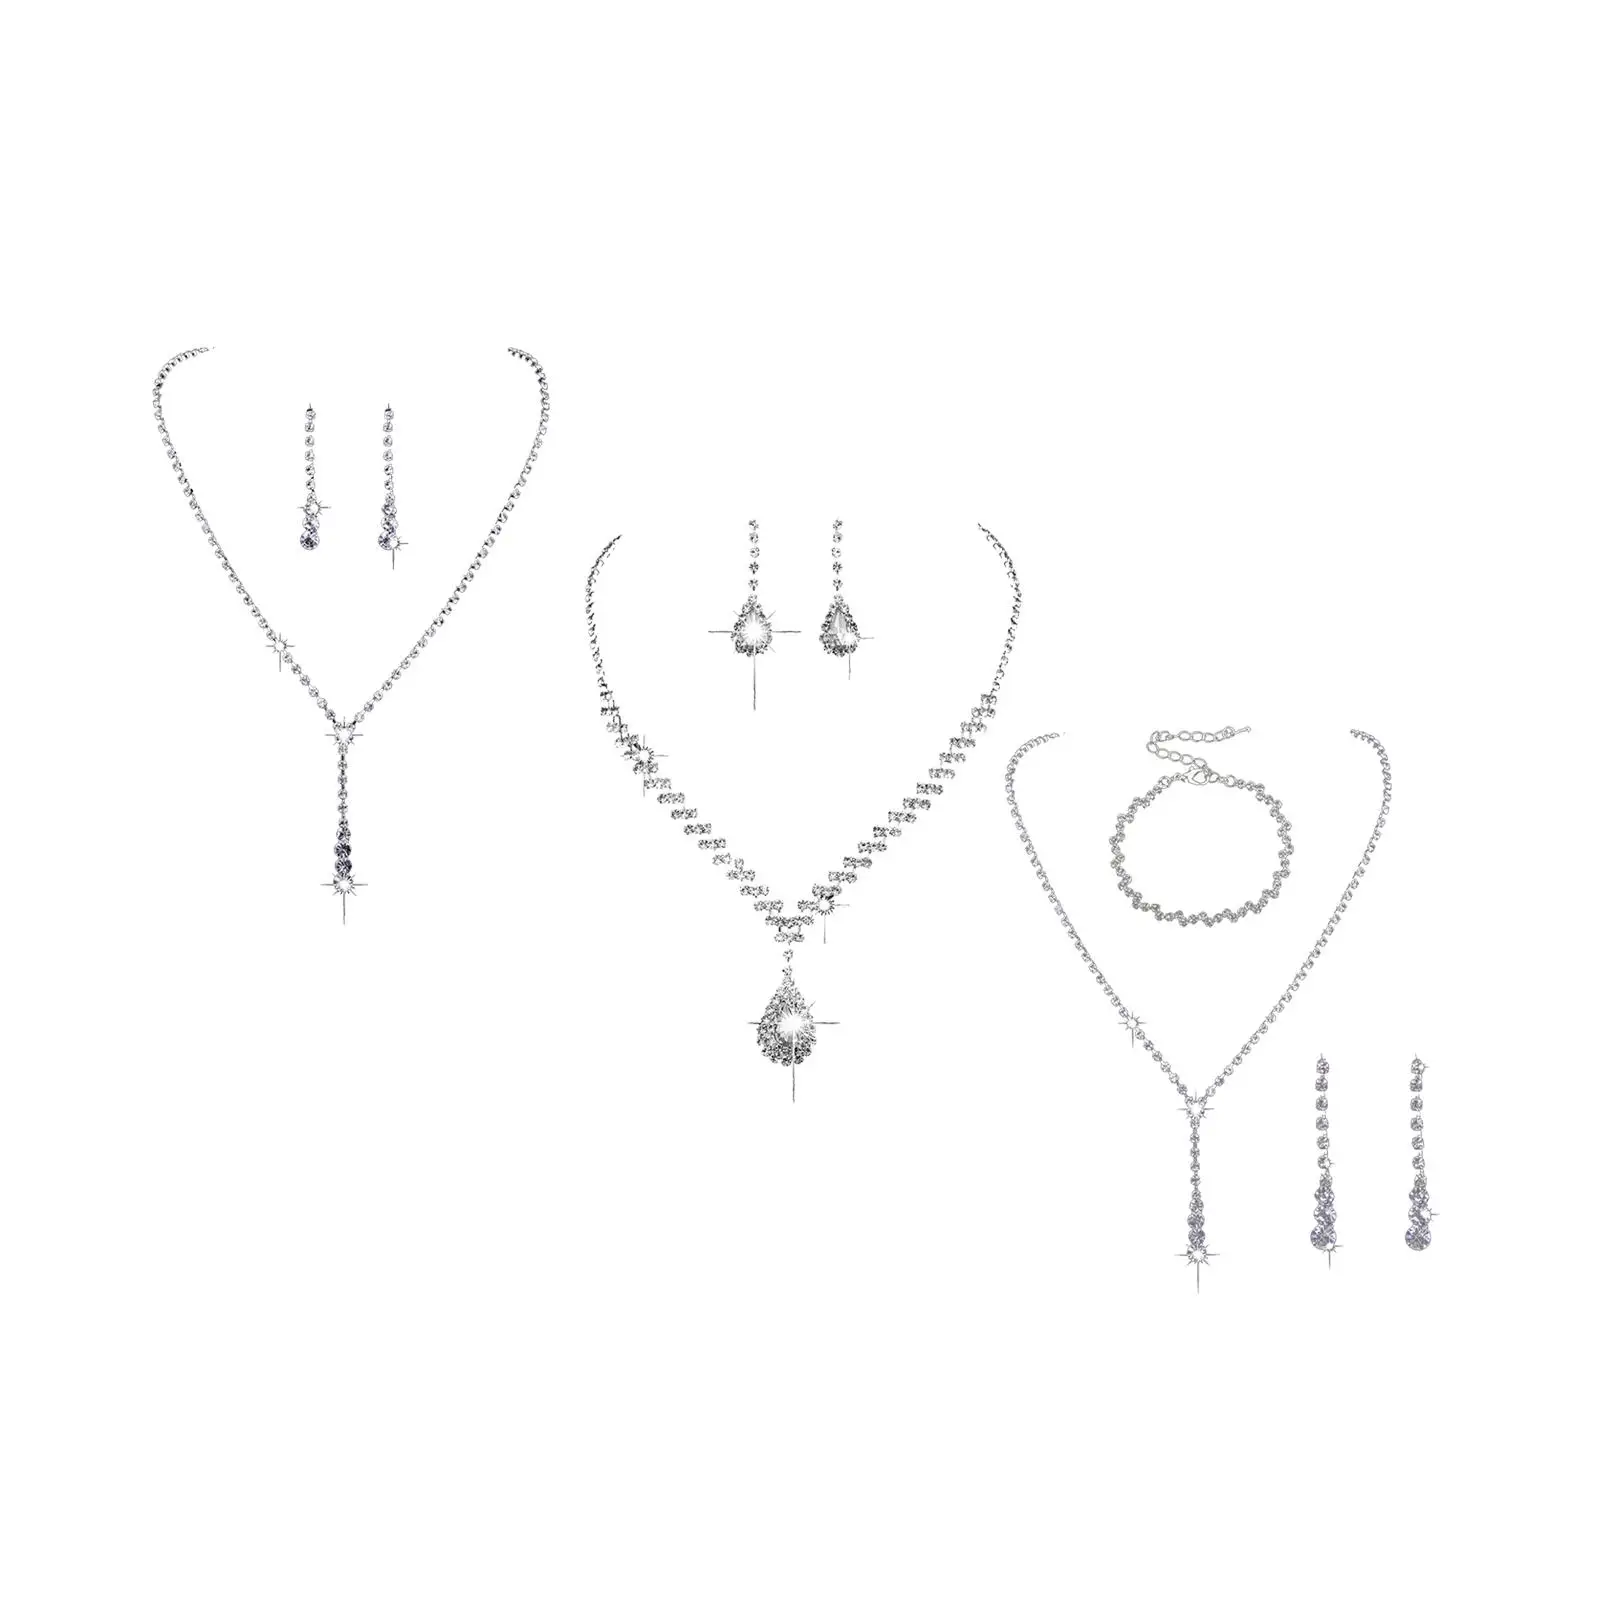 Jewelry Set Rhinestone Necklace Earrings Set White Jewelry Set for Prom Gift Brides Women Teen Girls